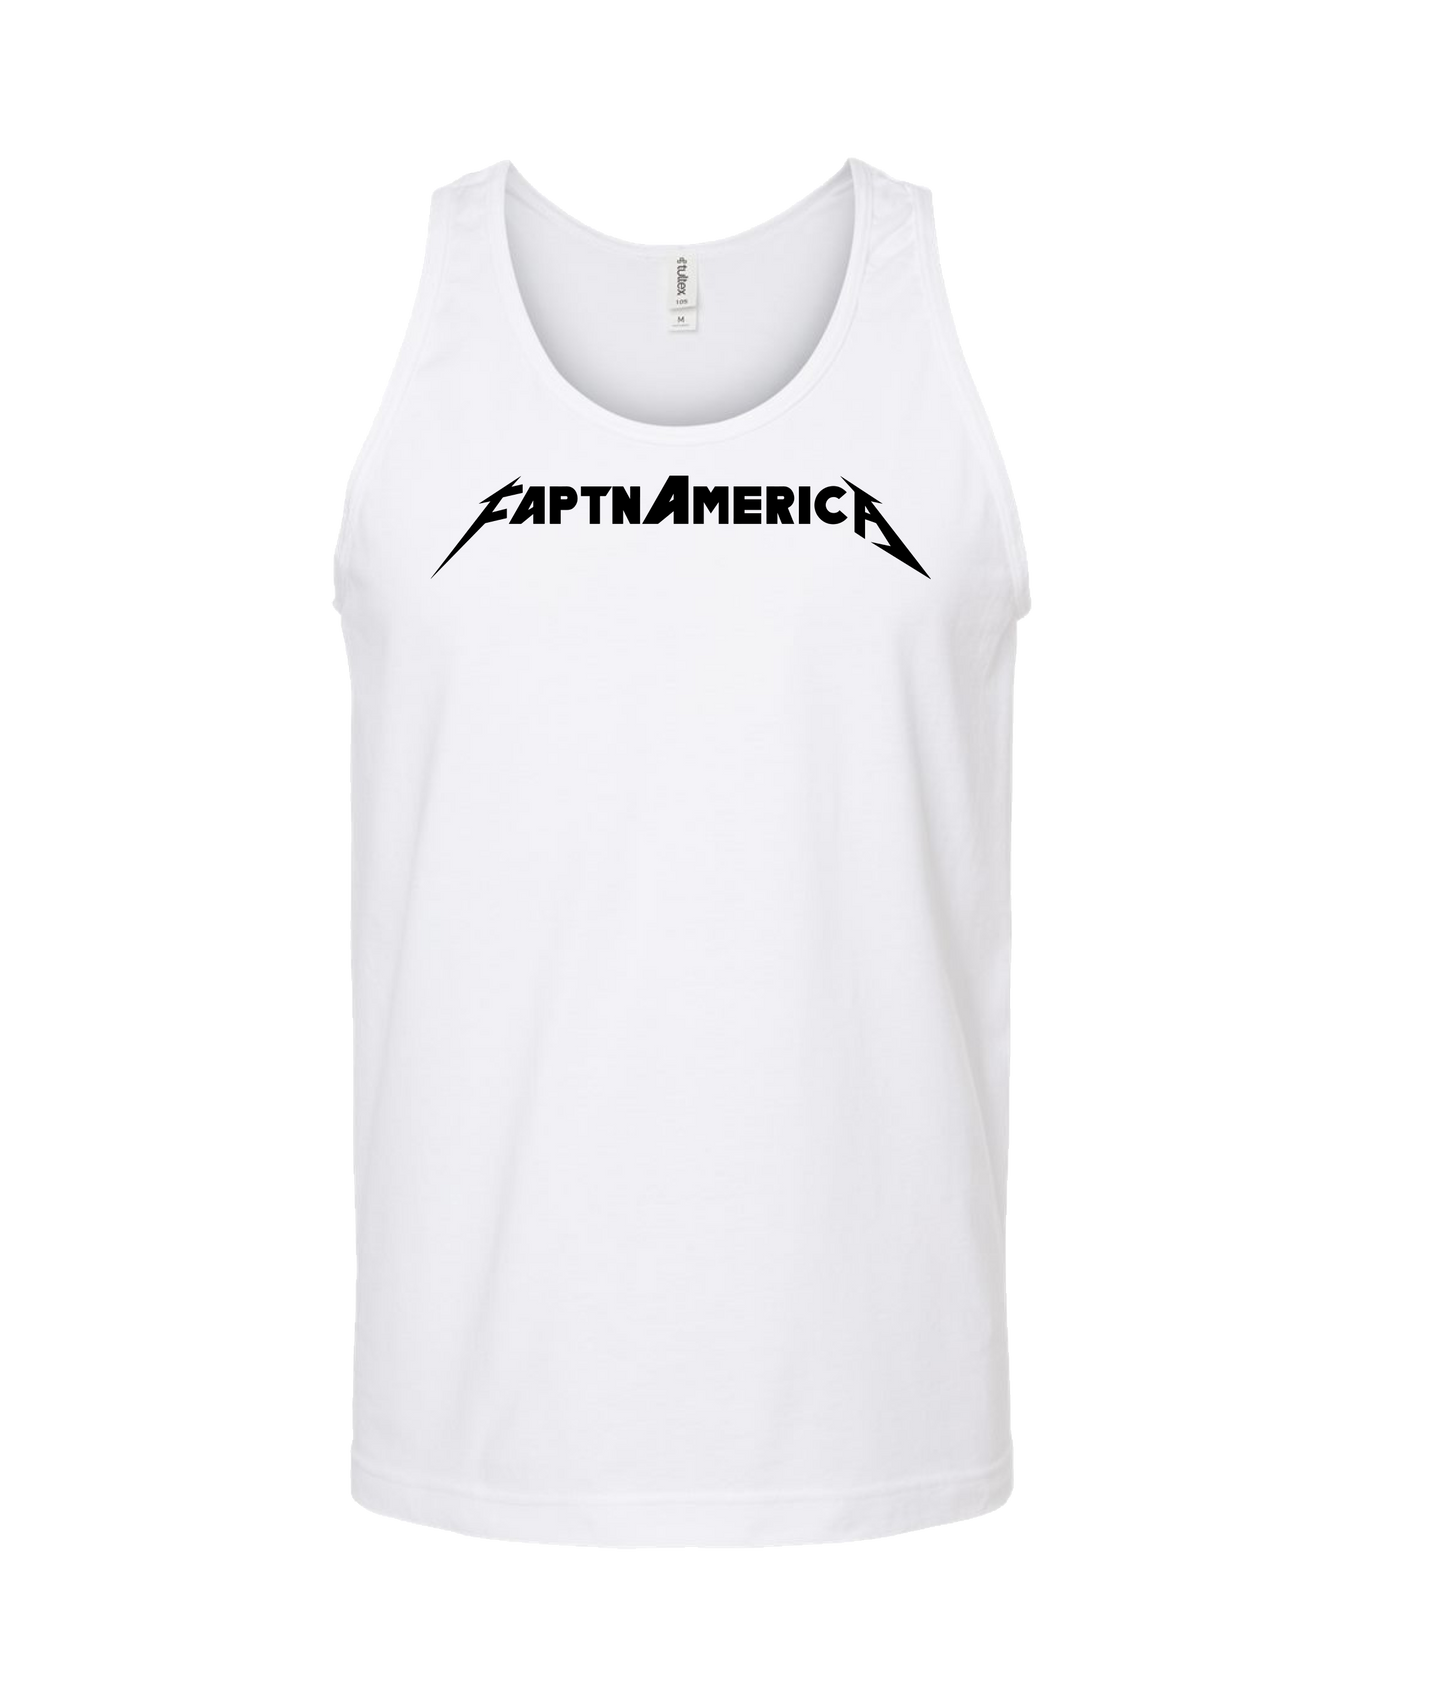 FaptnAmerica - Faptn METAL - White Tank Top